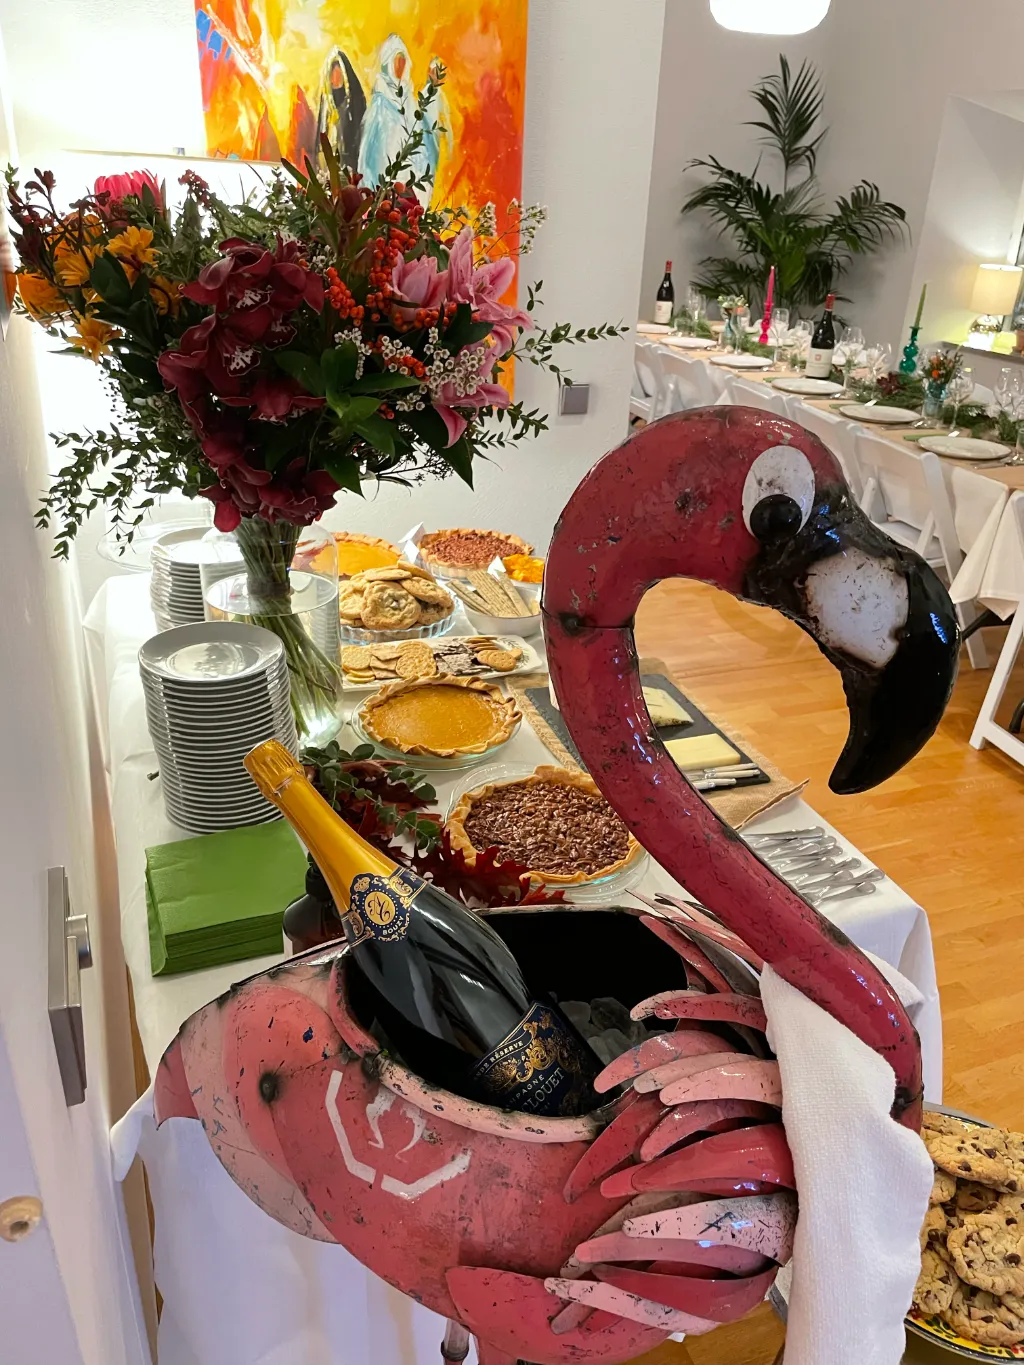 Table with food. Metal flamingo wine bottle cooler.